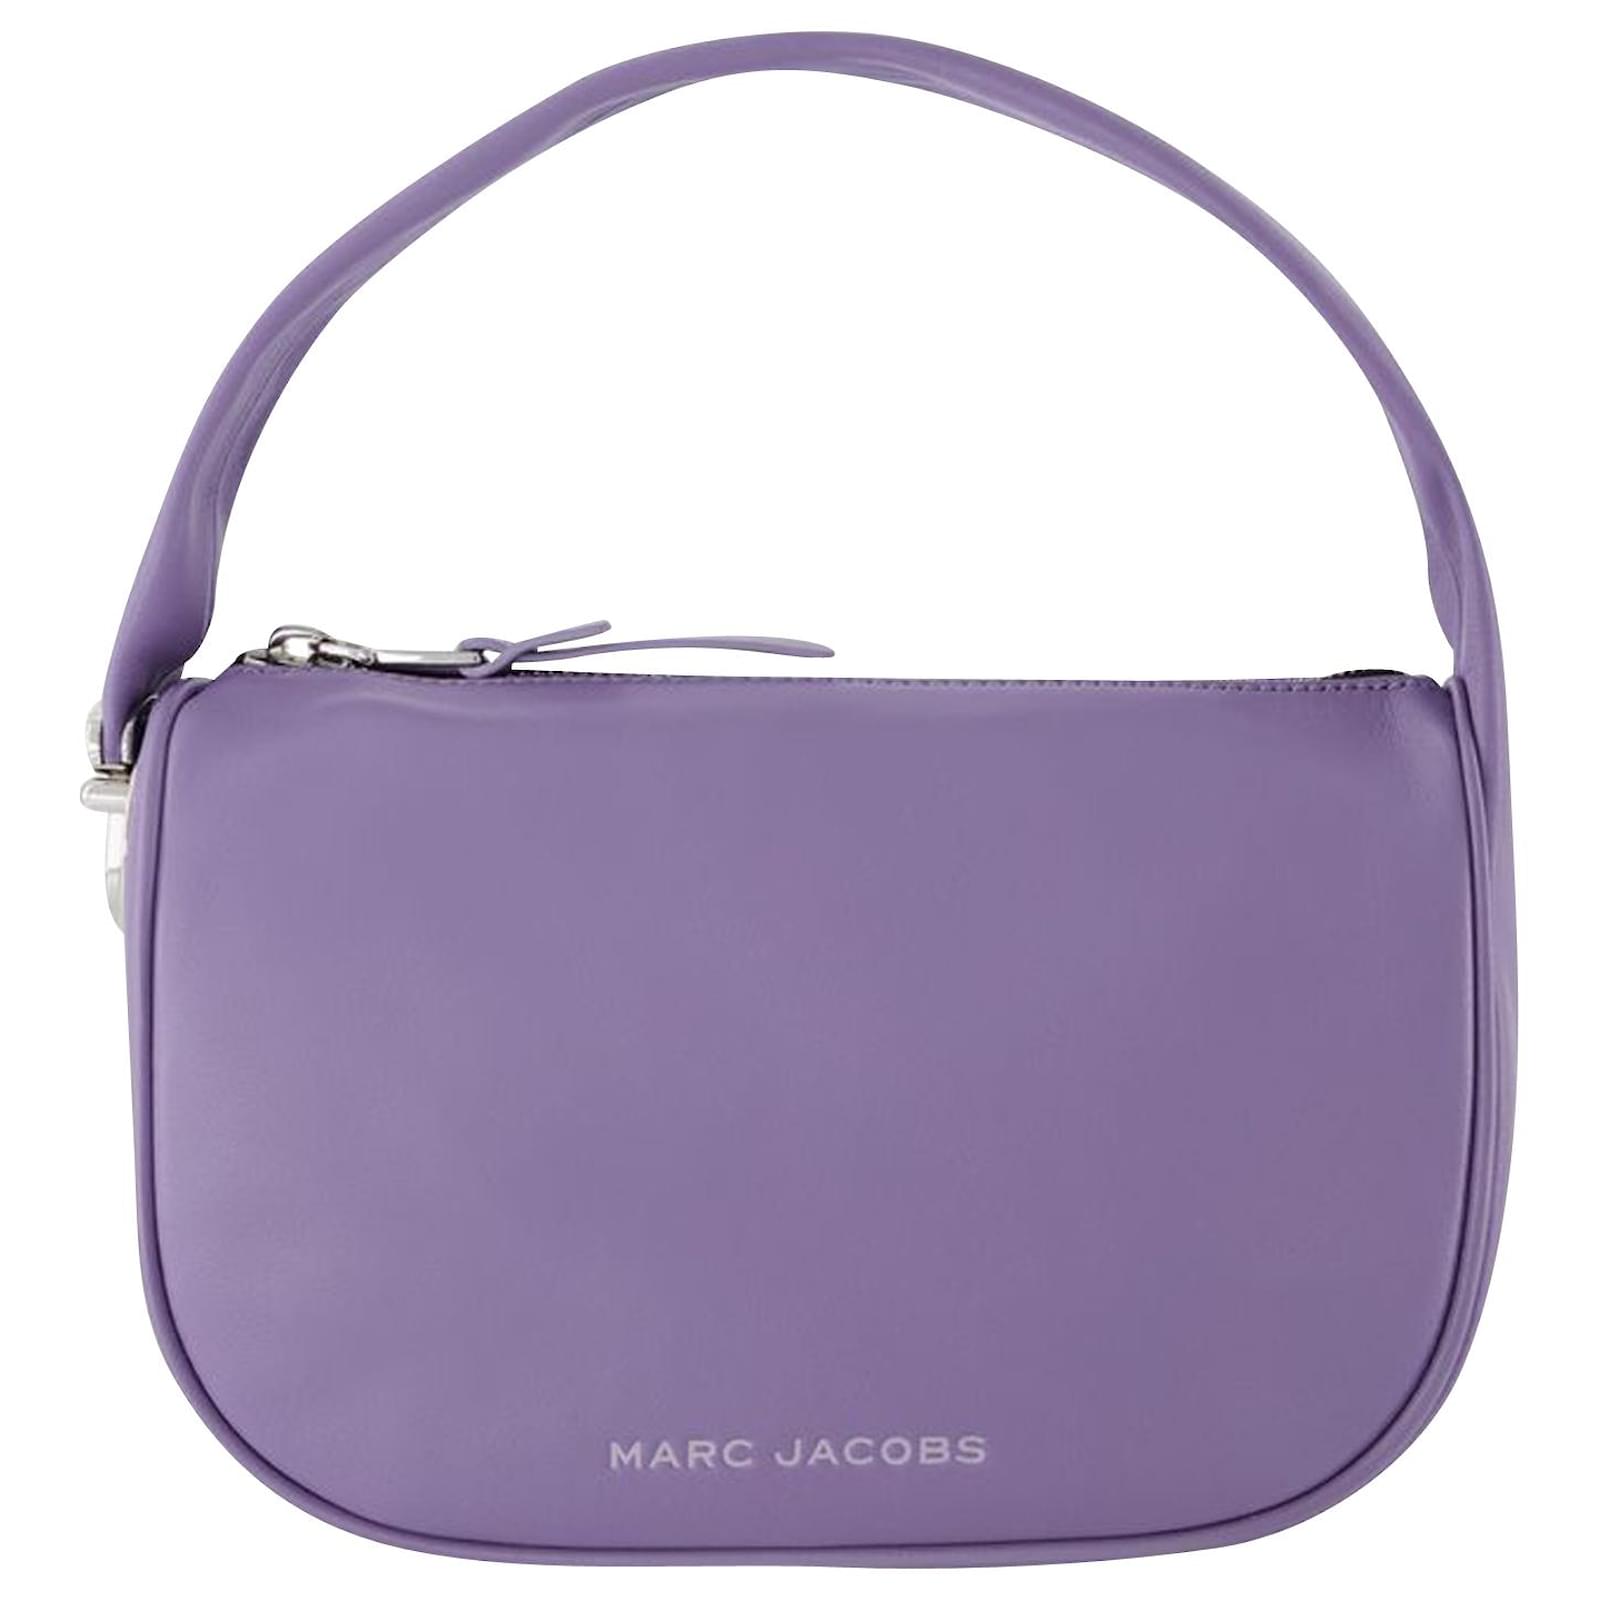 Fancy winning a Marc Jacobs handbag for Purple Day®? | Epilepsy Ireland